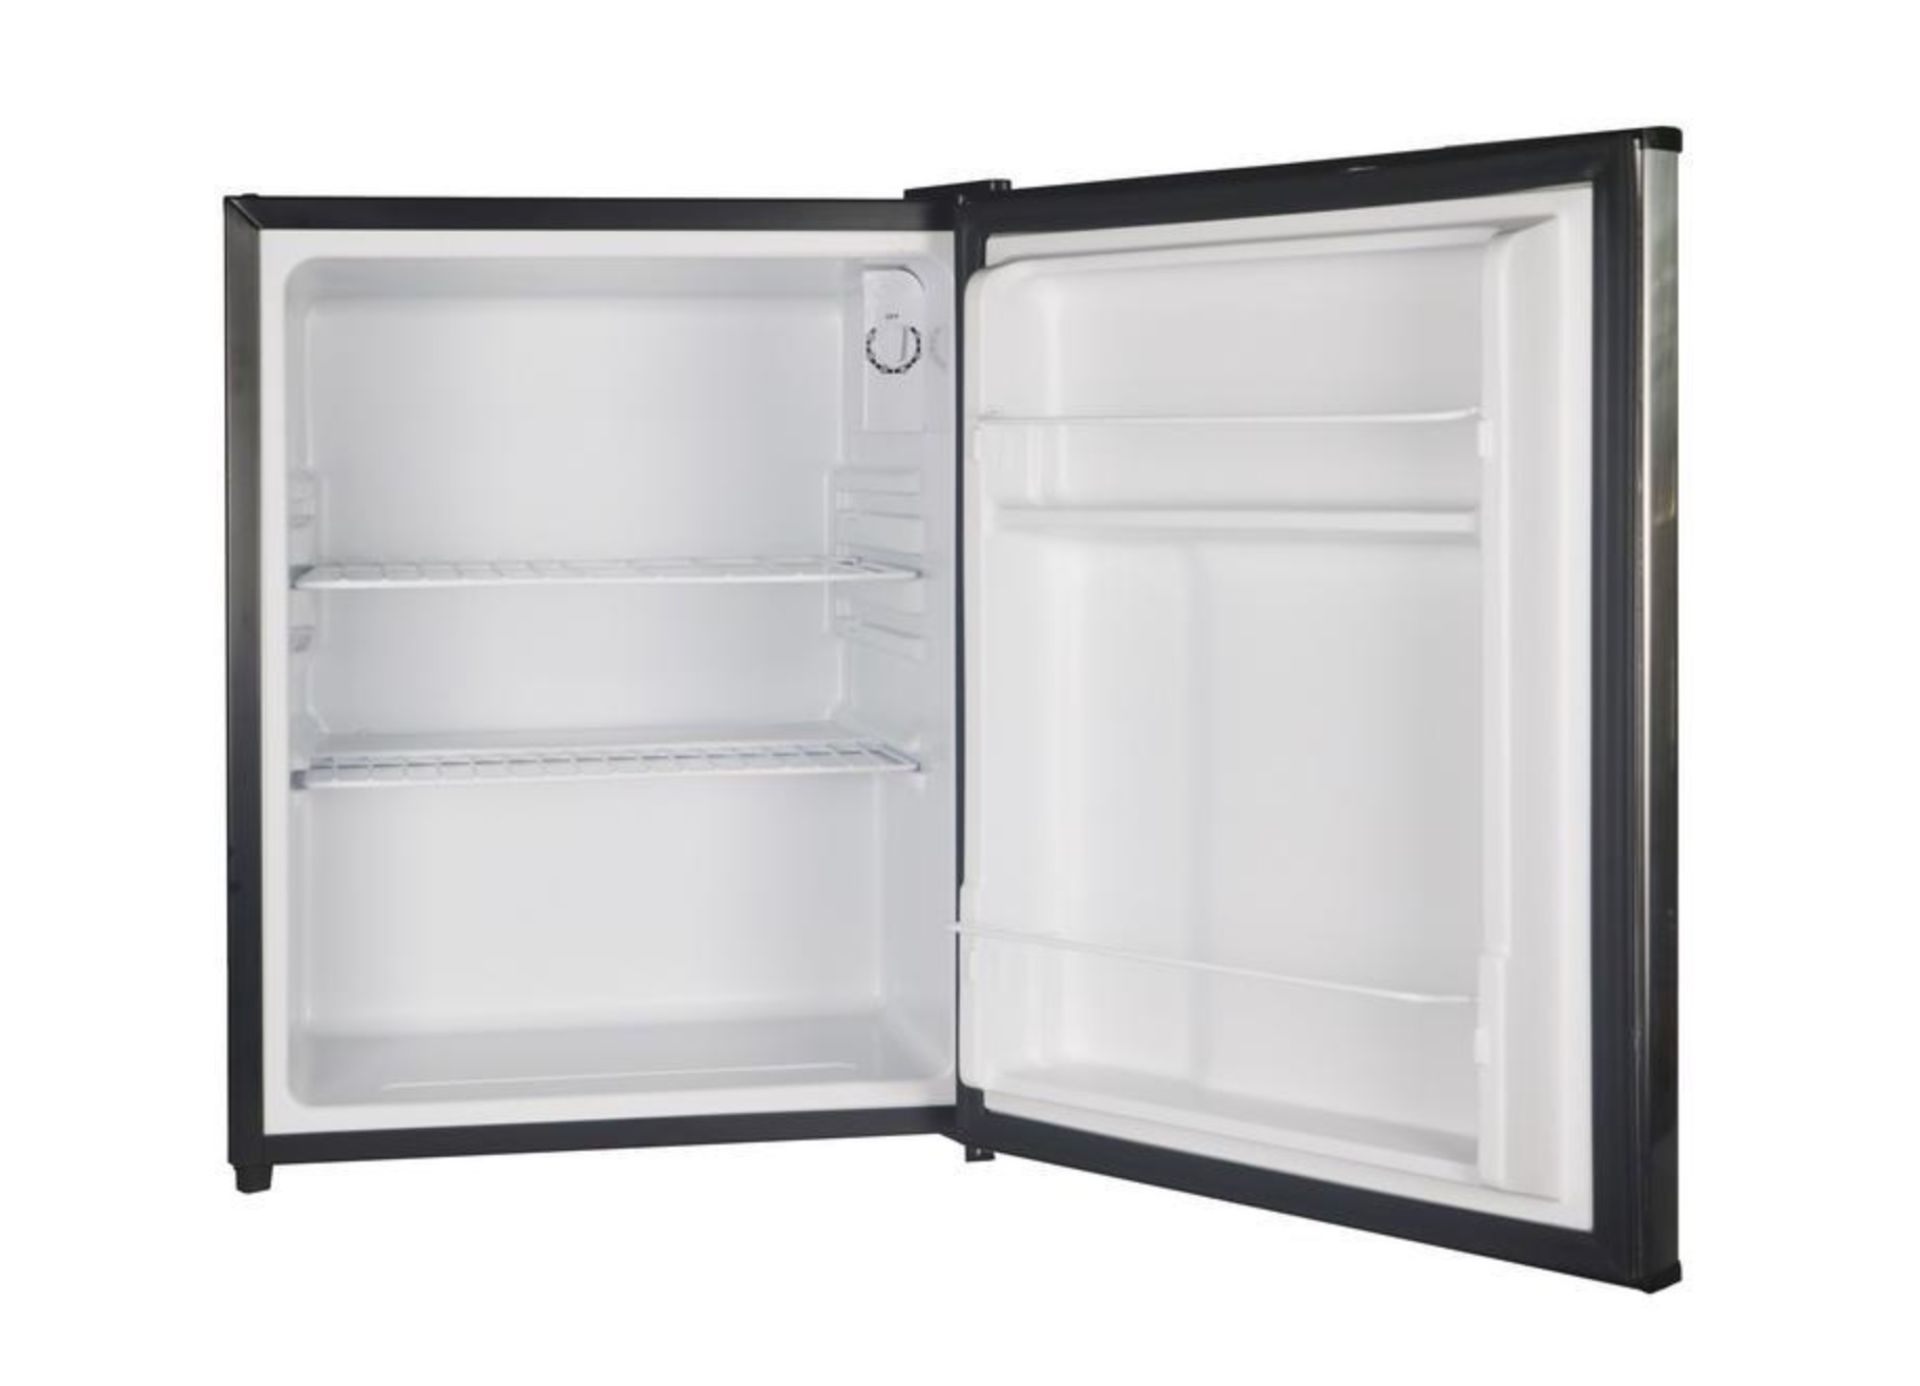 Compact Refrigerator - Image 2 of 3